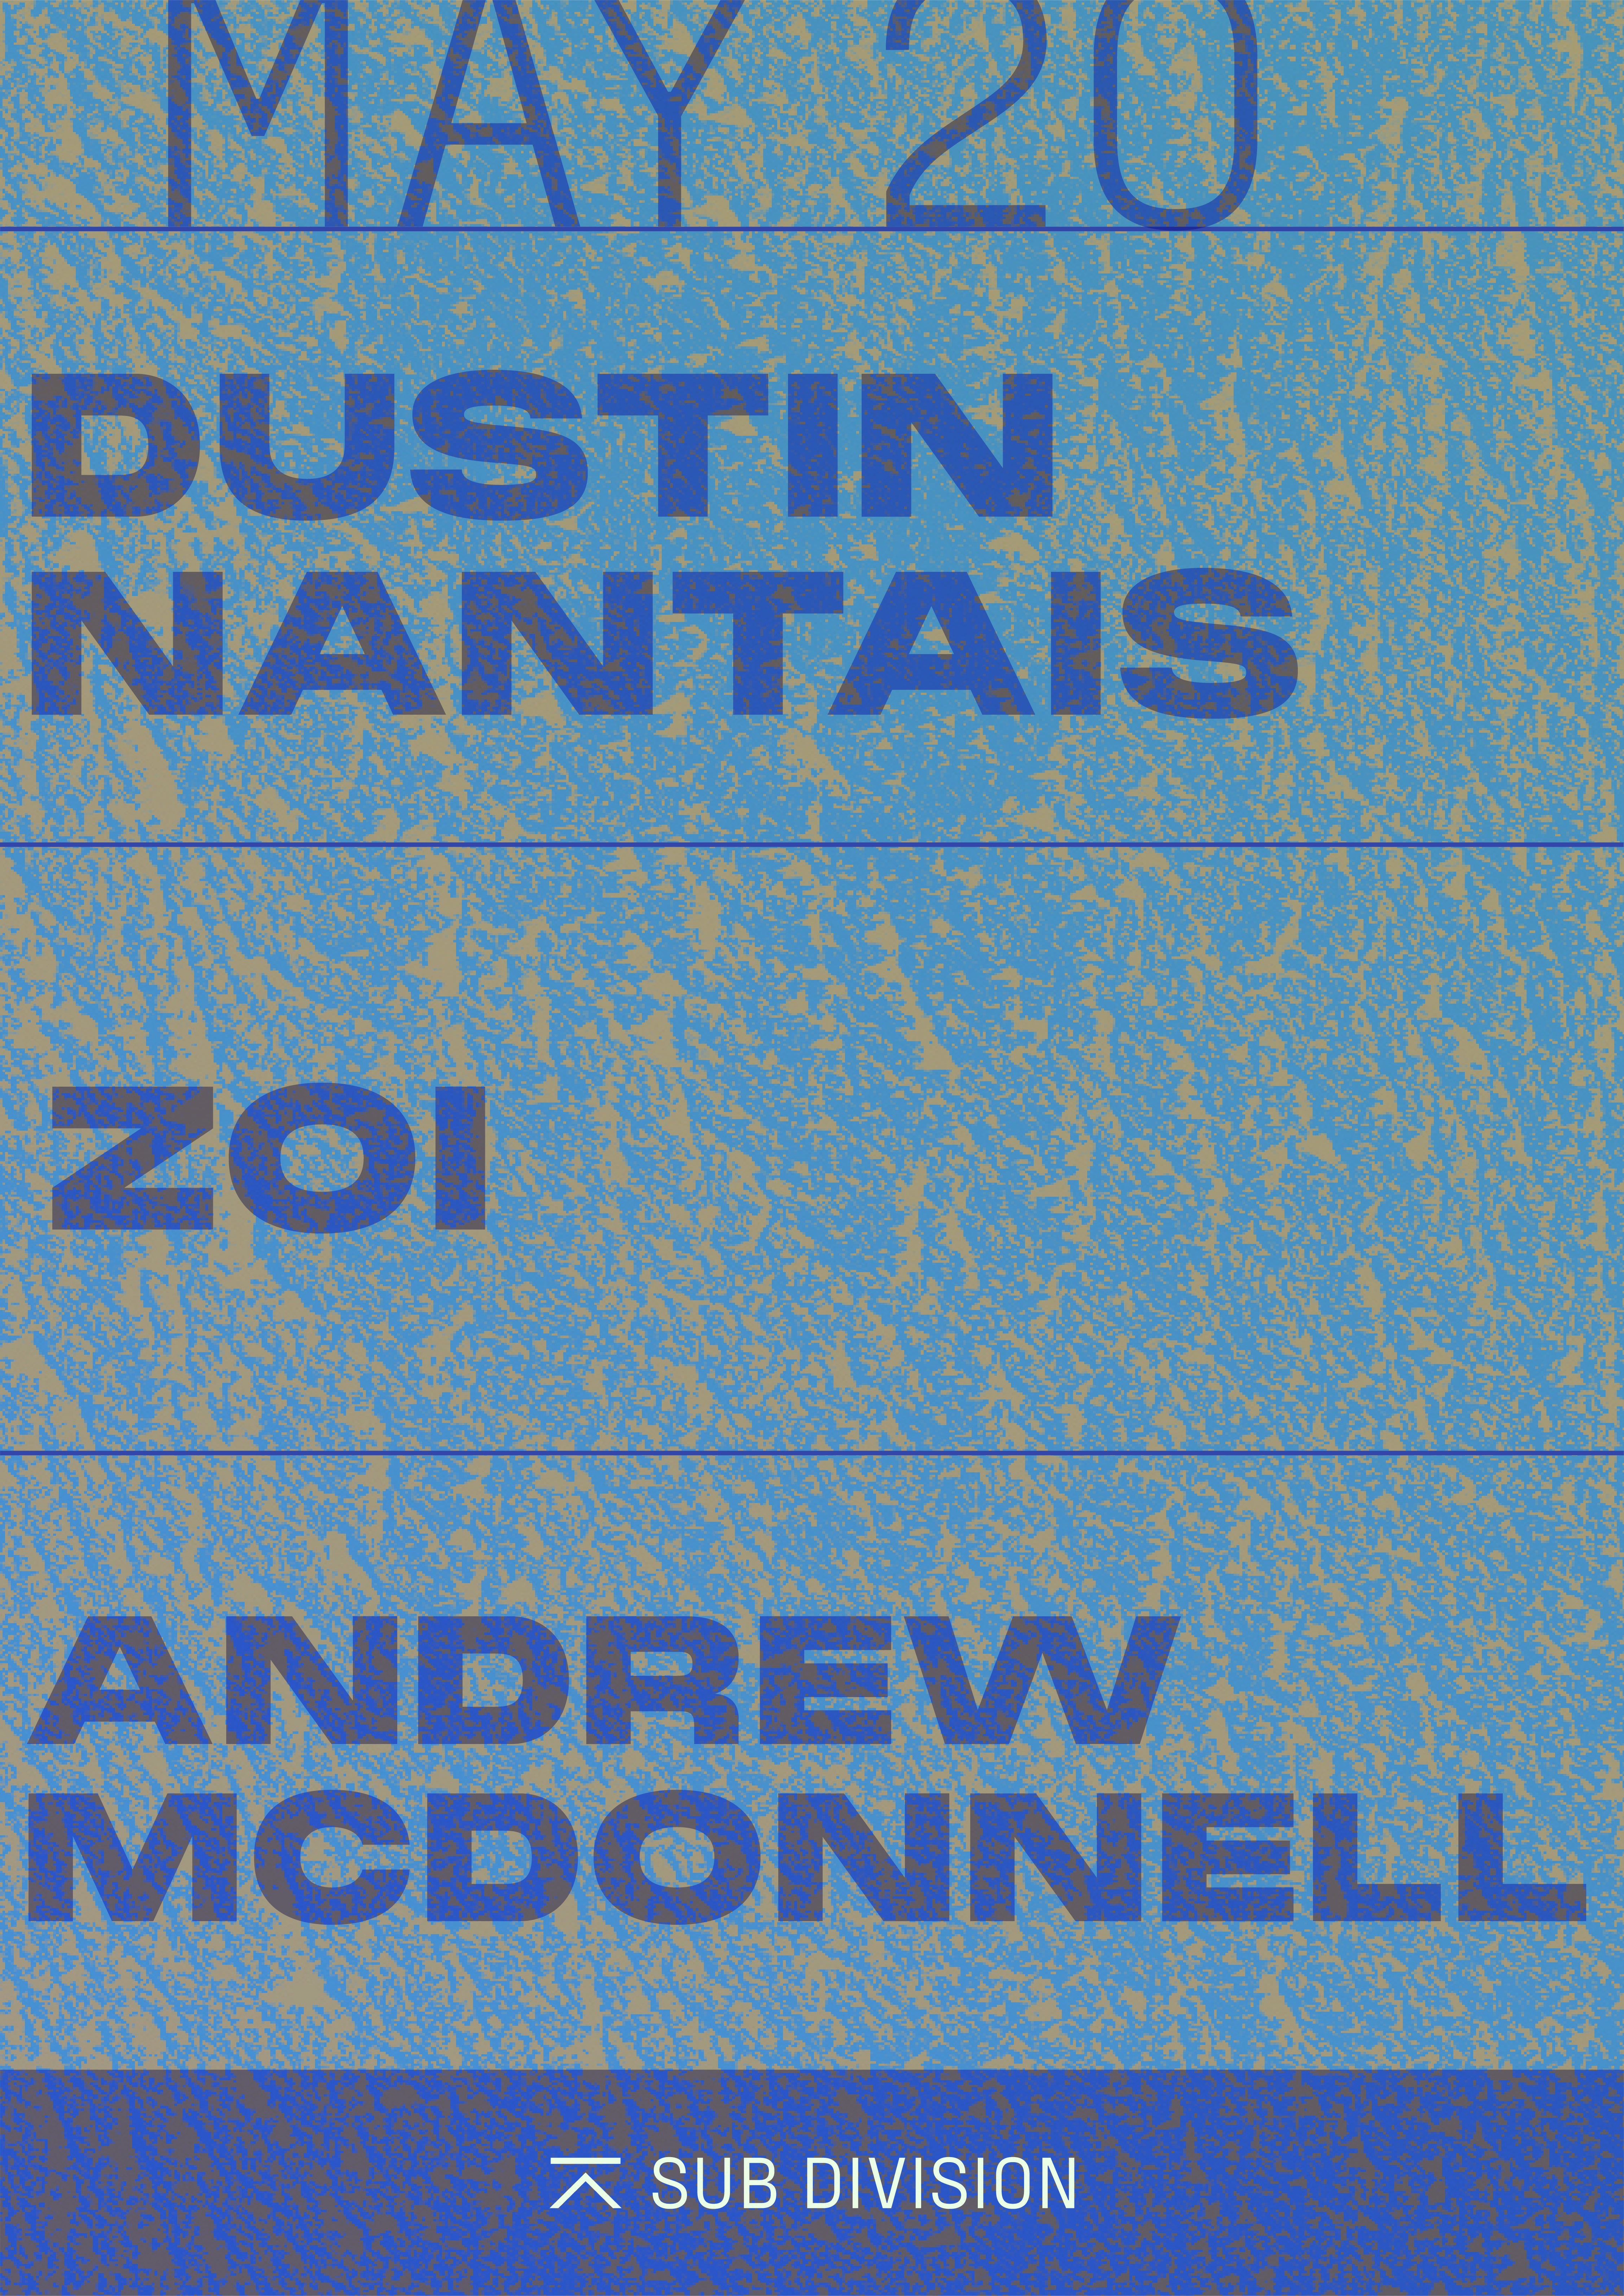 Dustin Nantais + Zoi + Andrew McDonnell - フライヤー表